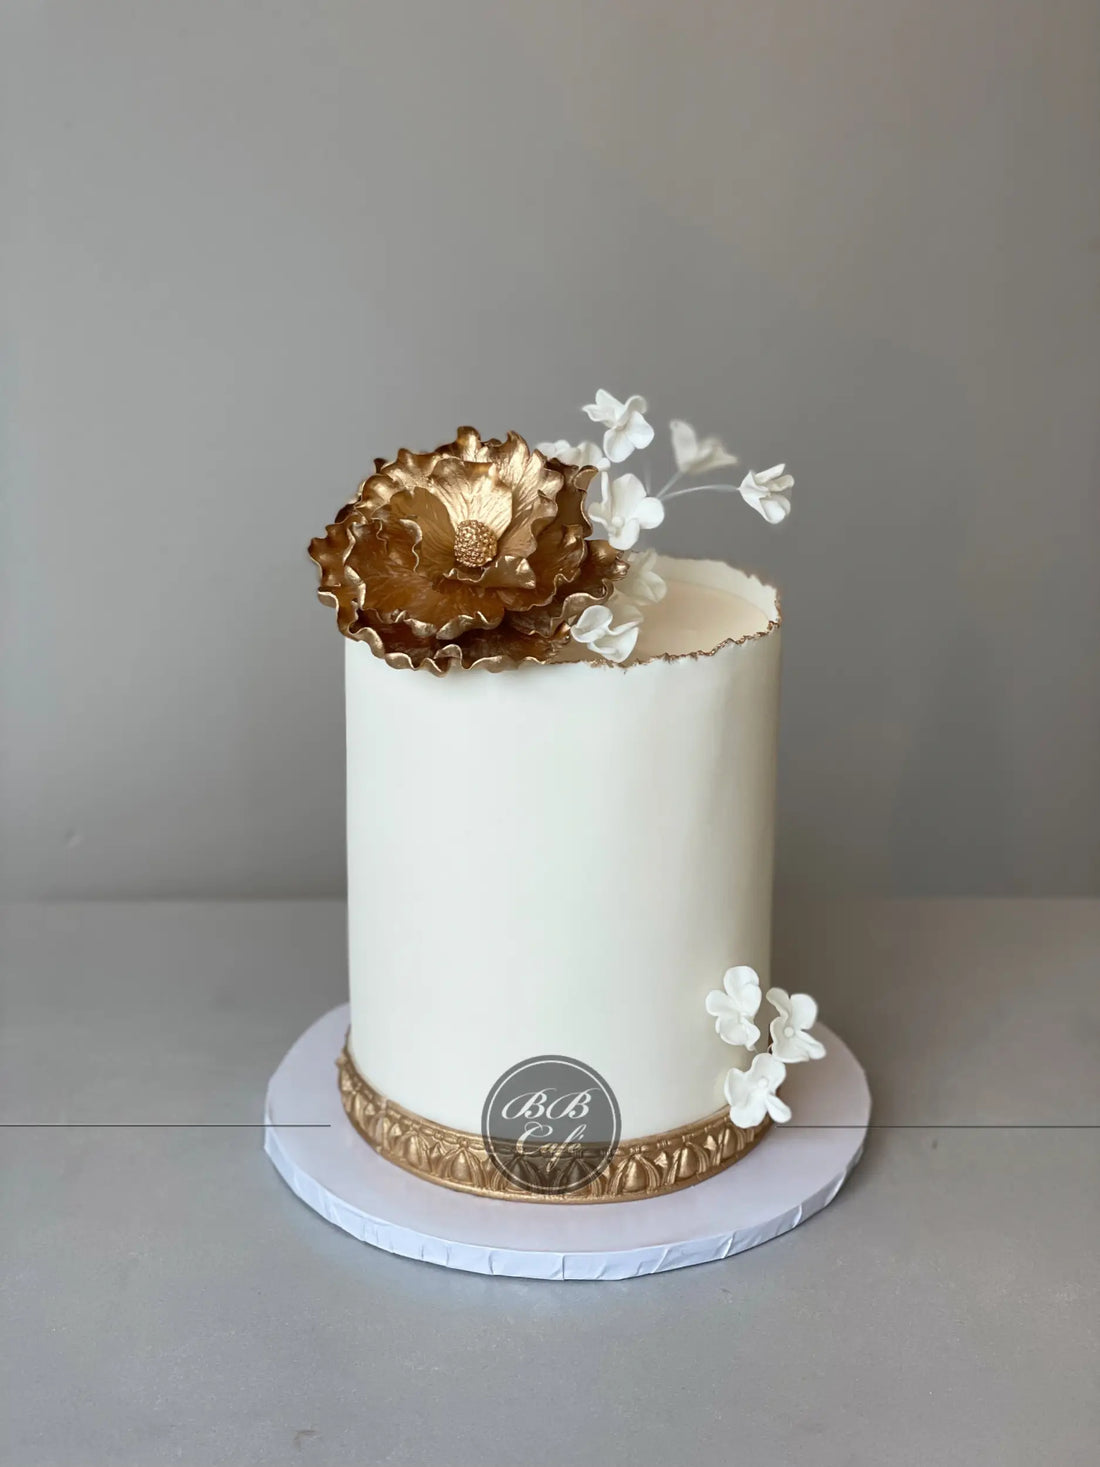 Sugar flower on deckled edge fondant - custom cake